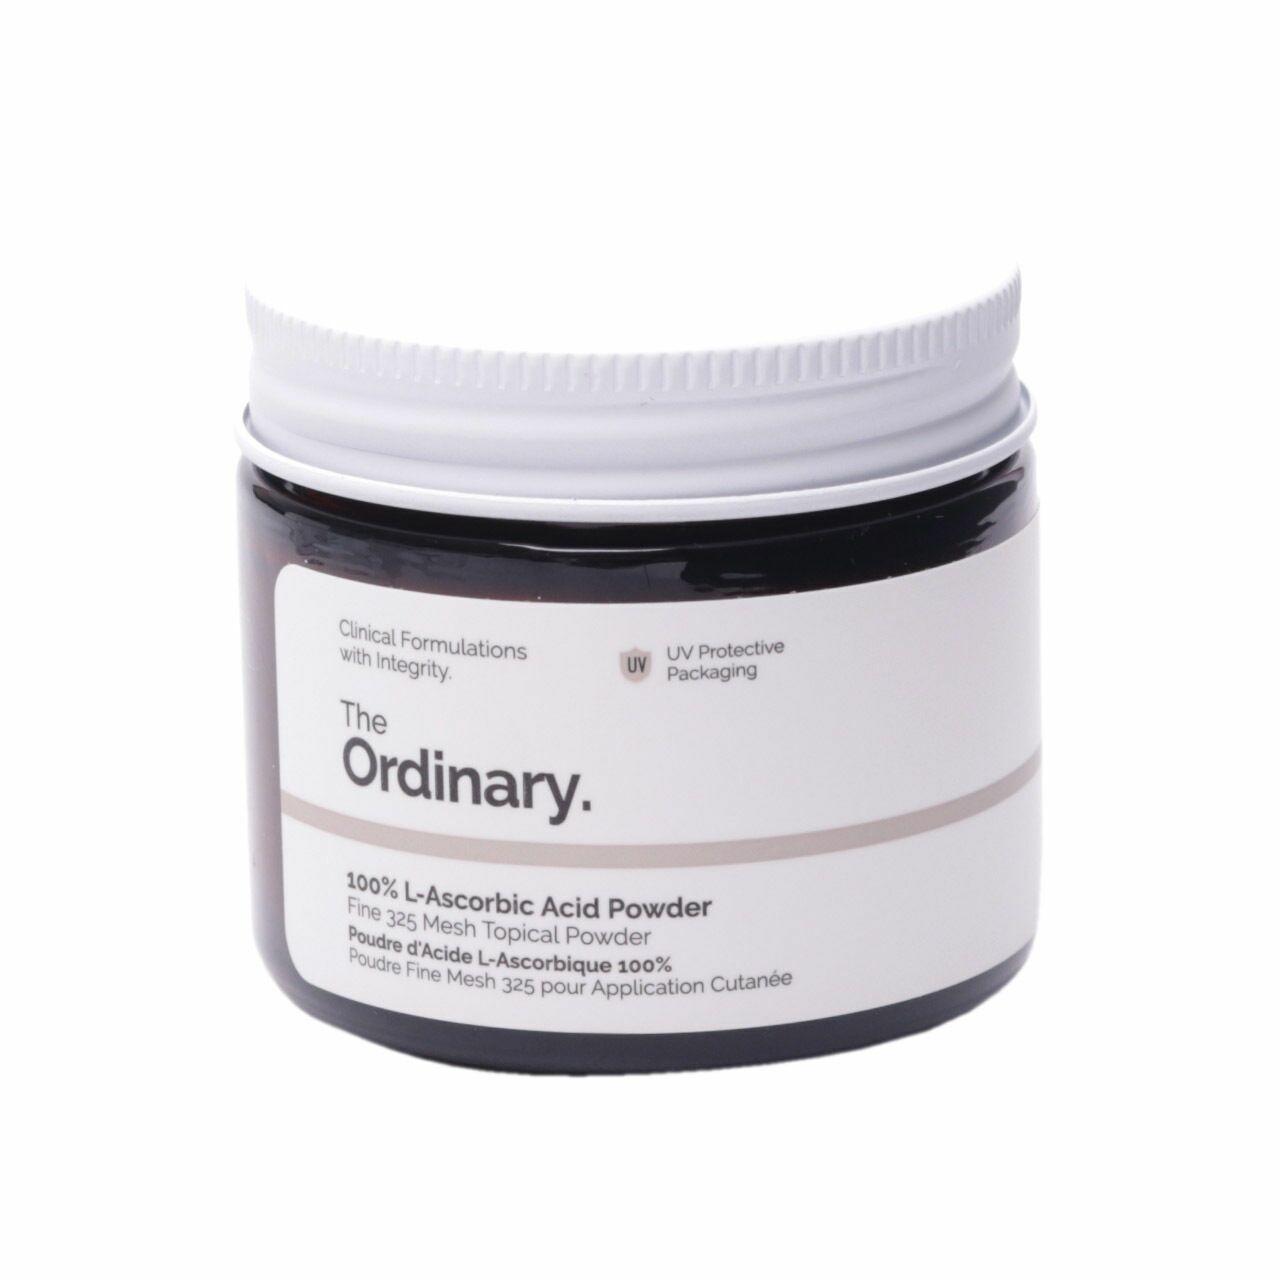 The Ordinary Vitamin C 100% L-Ascorbic Acid Powder Skin Care